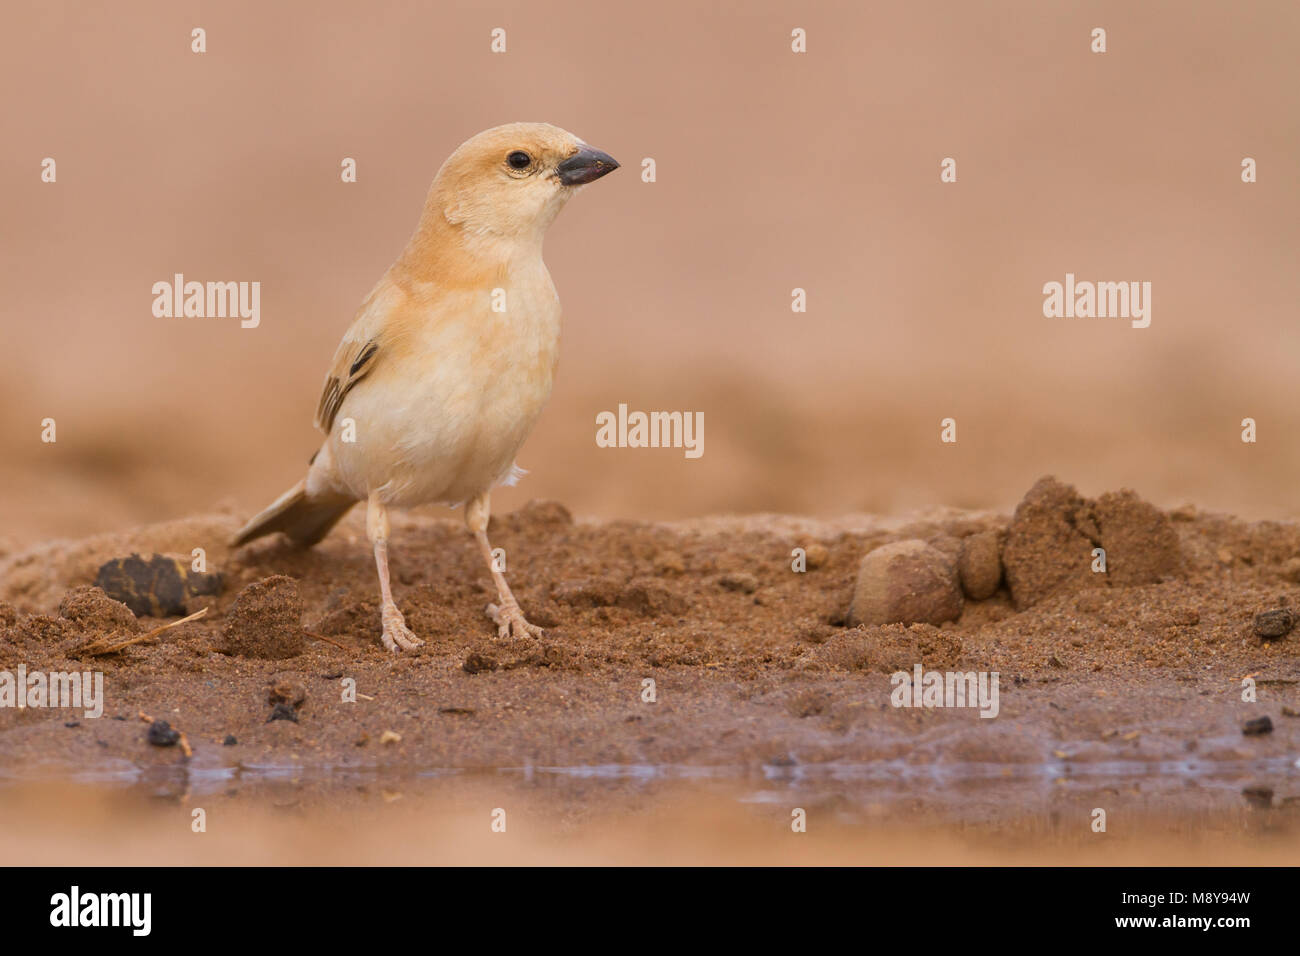 Deserto Sparrow - Wüstensperling - Passer simplex ssp. saharae, estate piumaggio femmina, Marocco Foto Stock